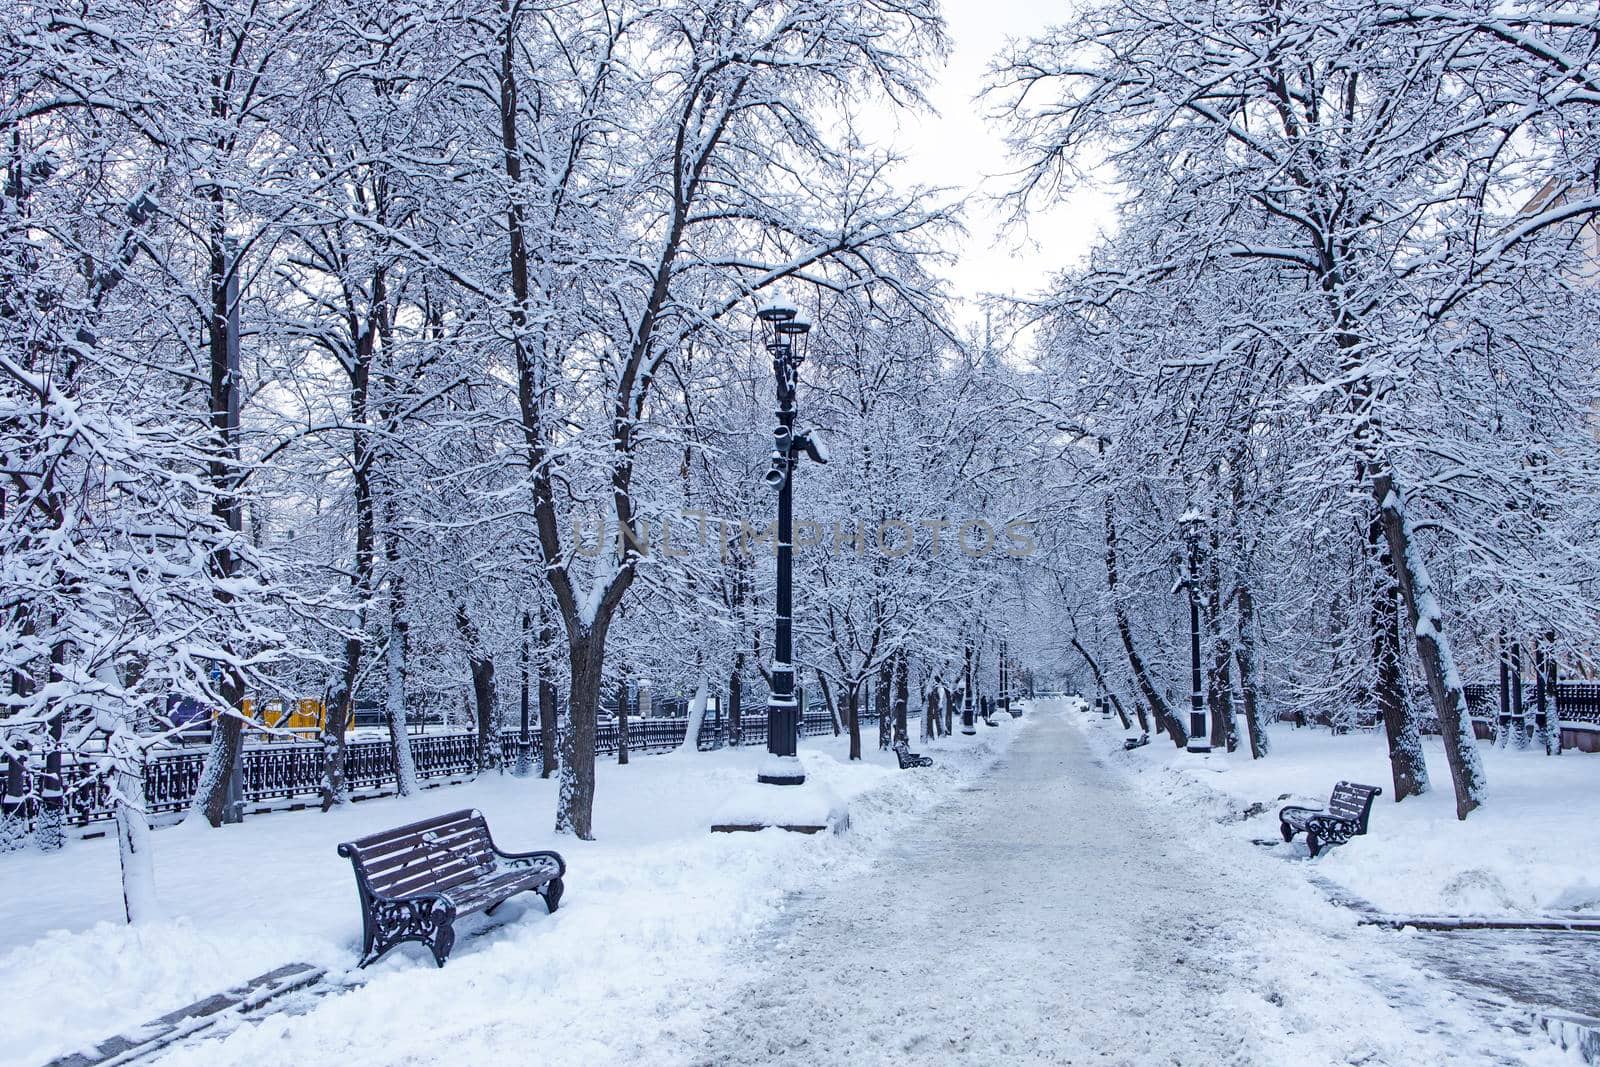 Rozhdestvensky boulevard, garden ring in snowfall by elenarostunova